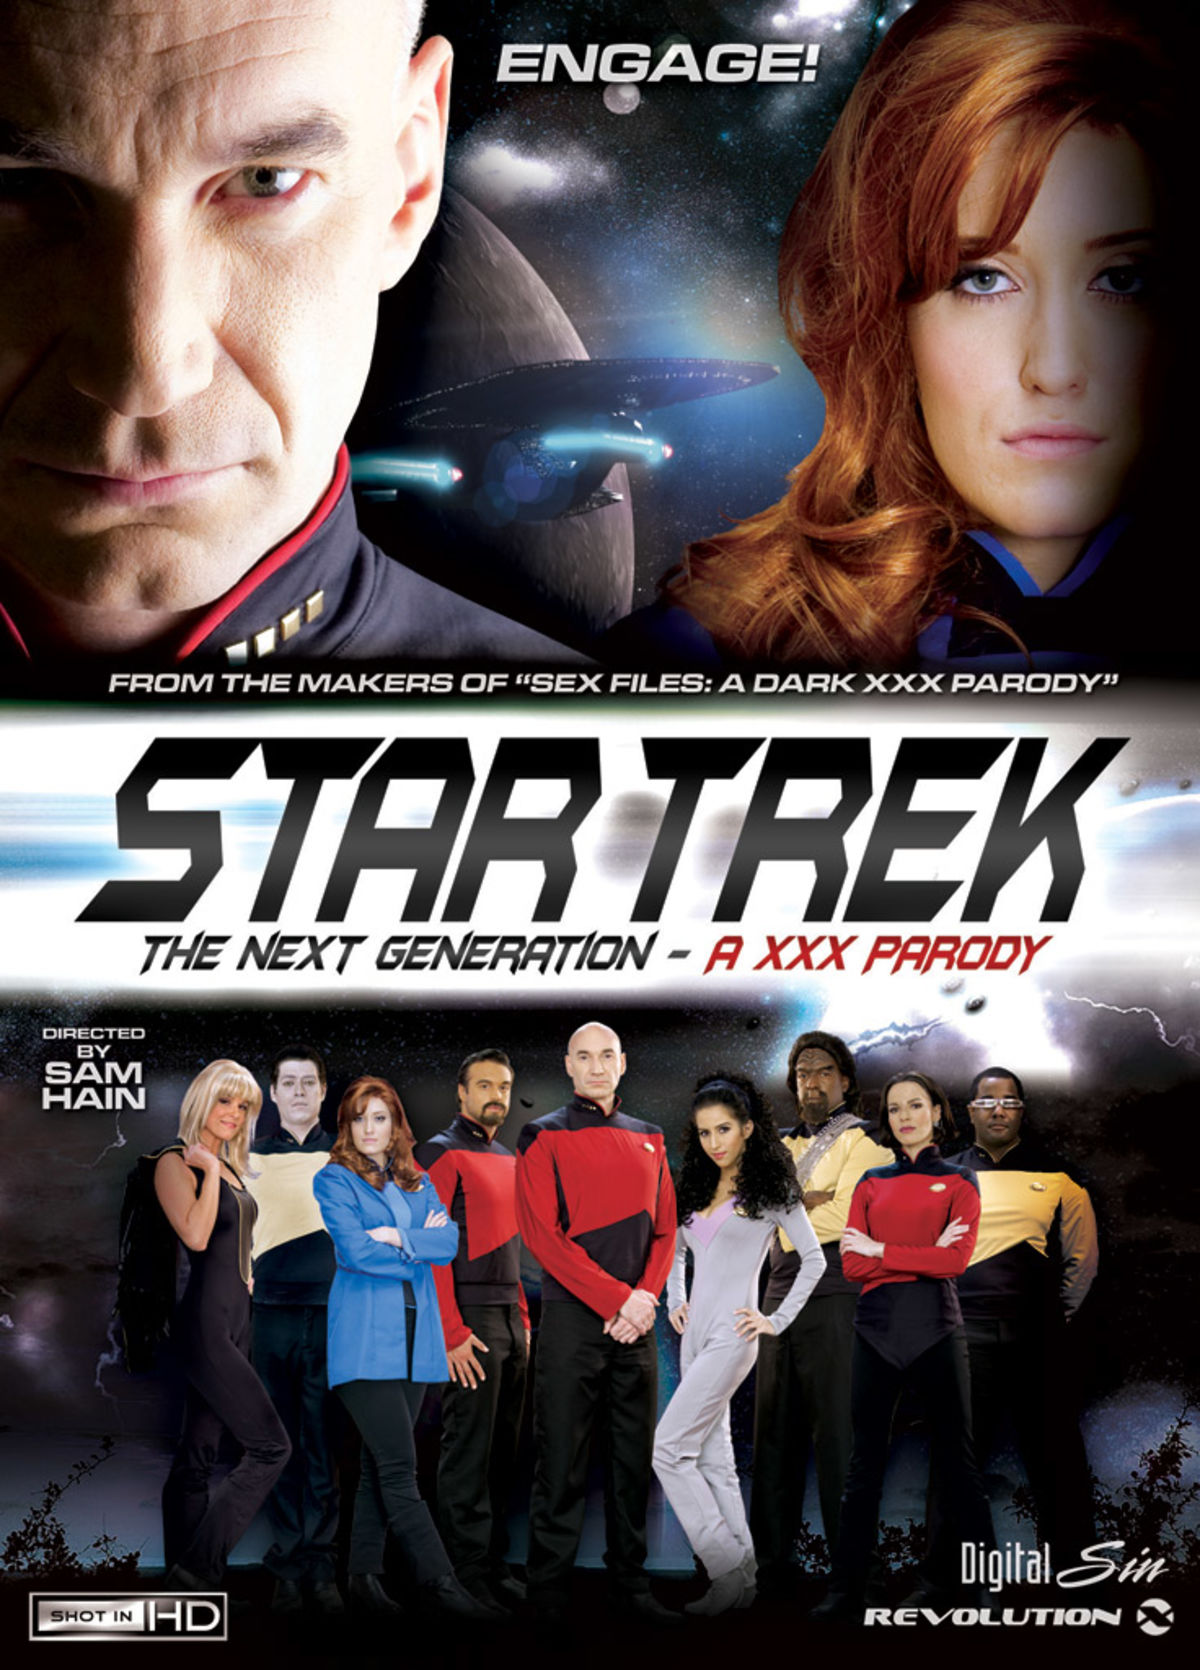 Star Trek Xxx Comics - Tasha Yar returns in SFW Star Trek: Next Gen XXX parody trailer